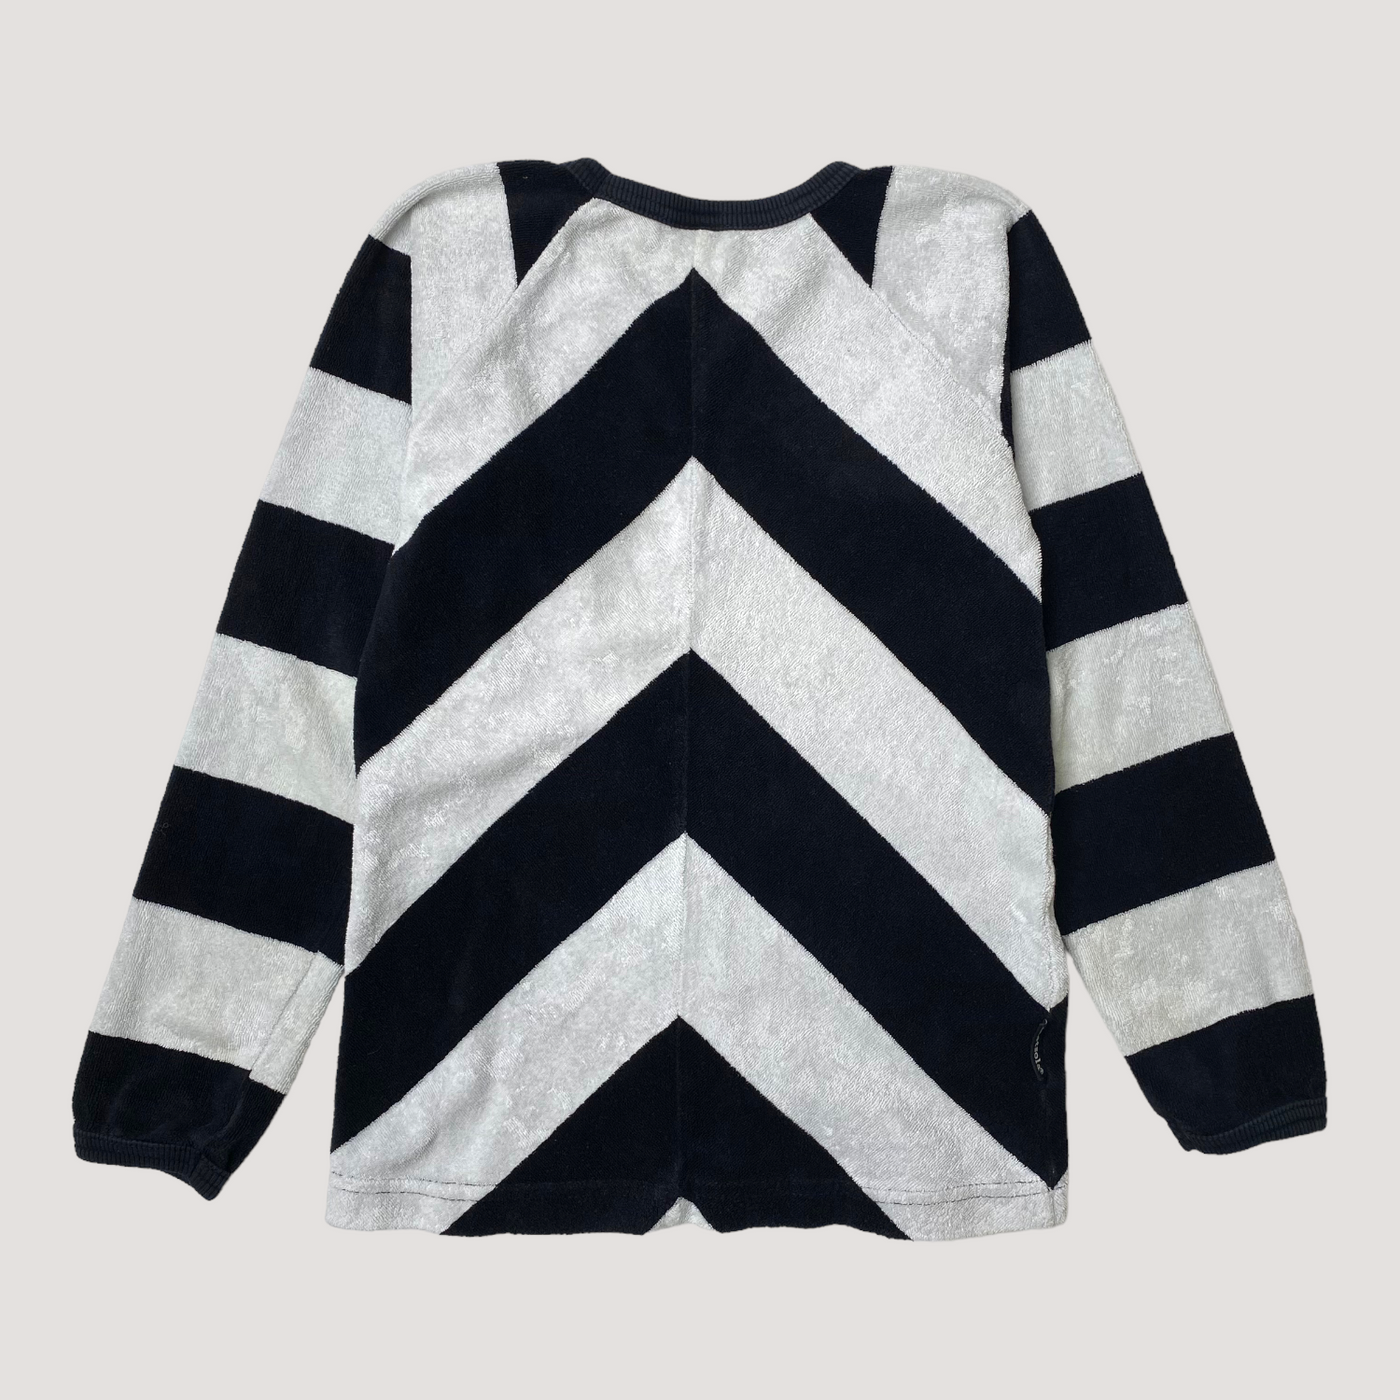 Metsola terry shirt, black/white | 134cm